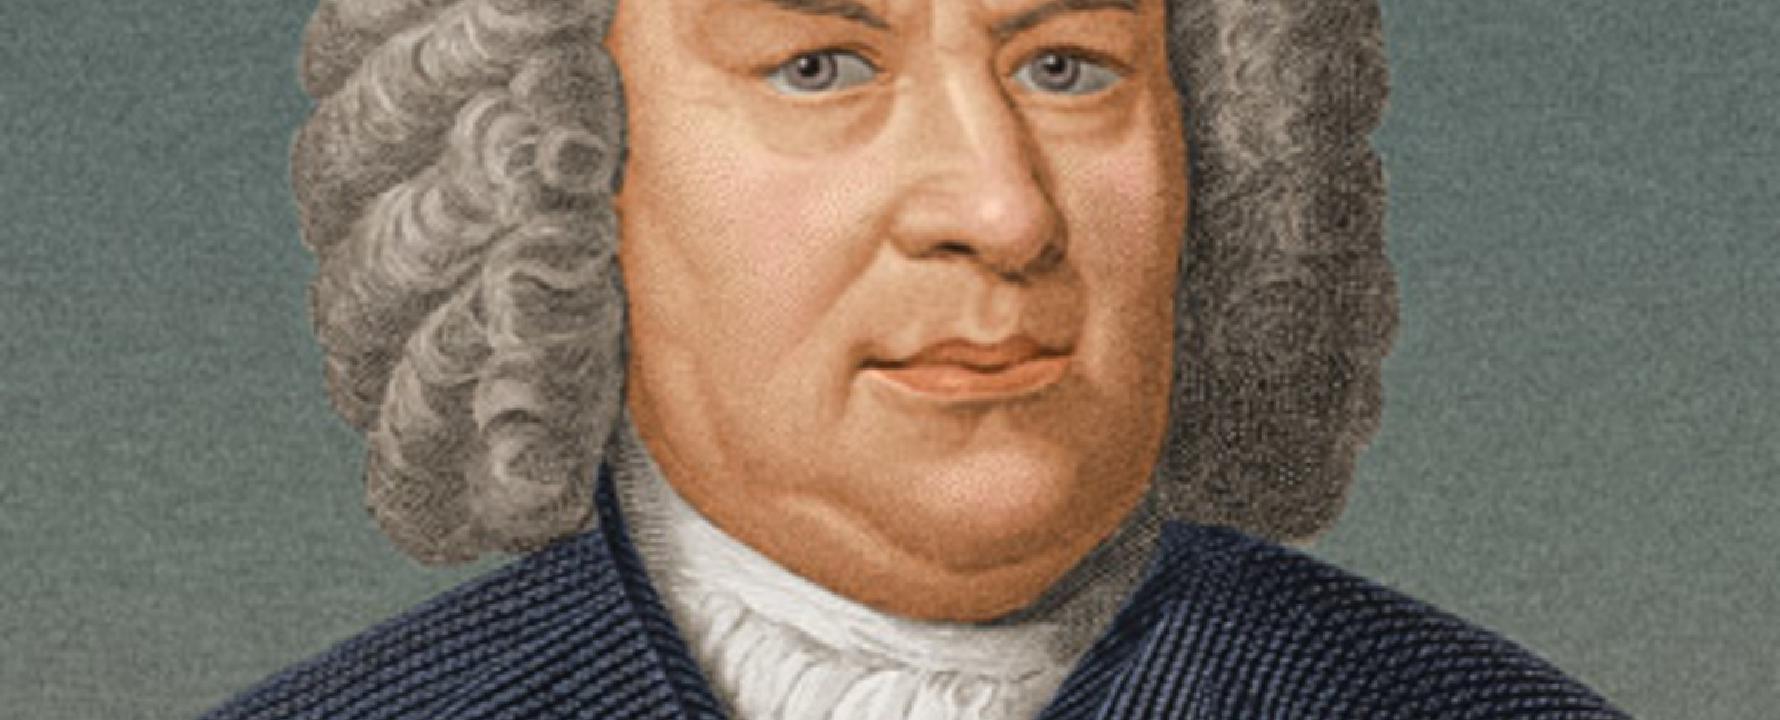 Promotional photograph of Johann Sebastian Bach.